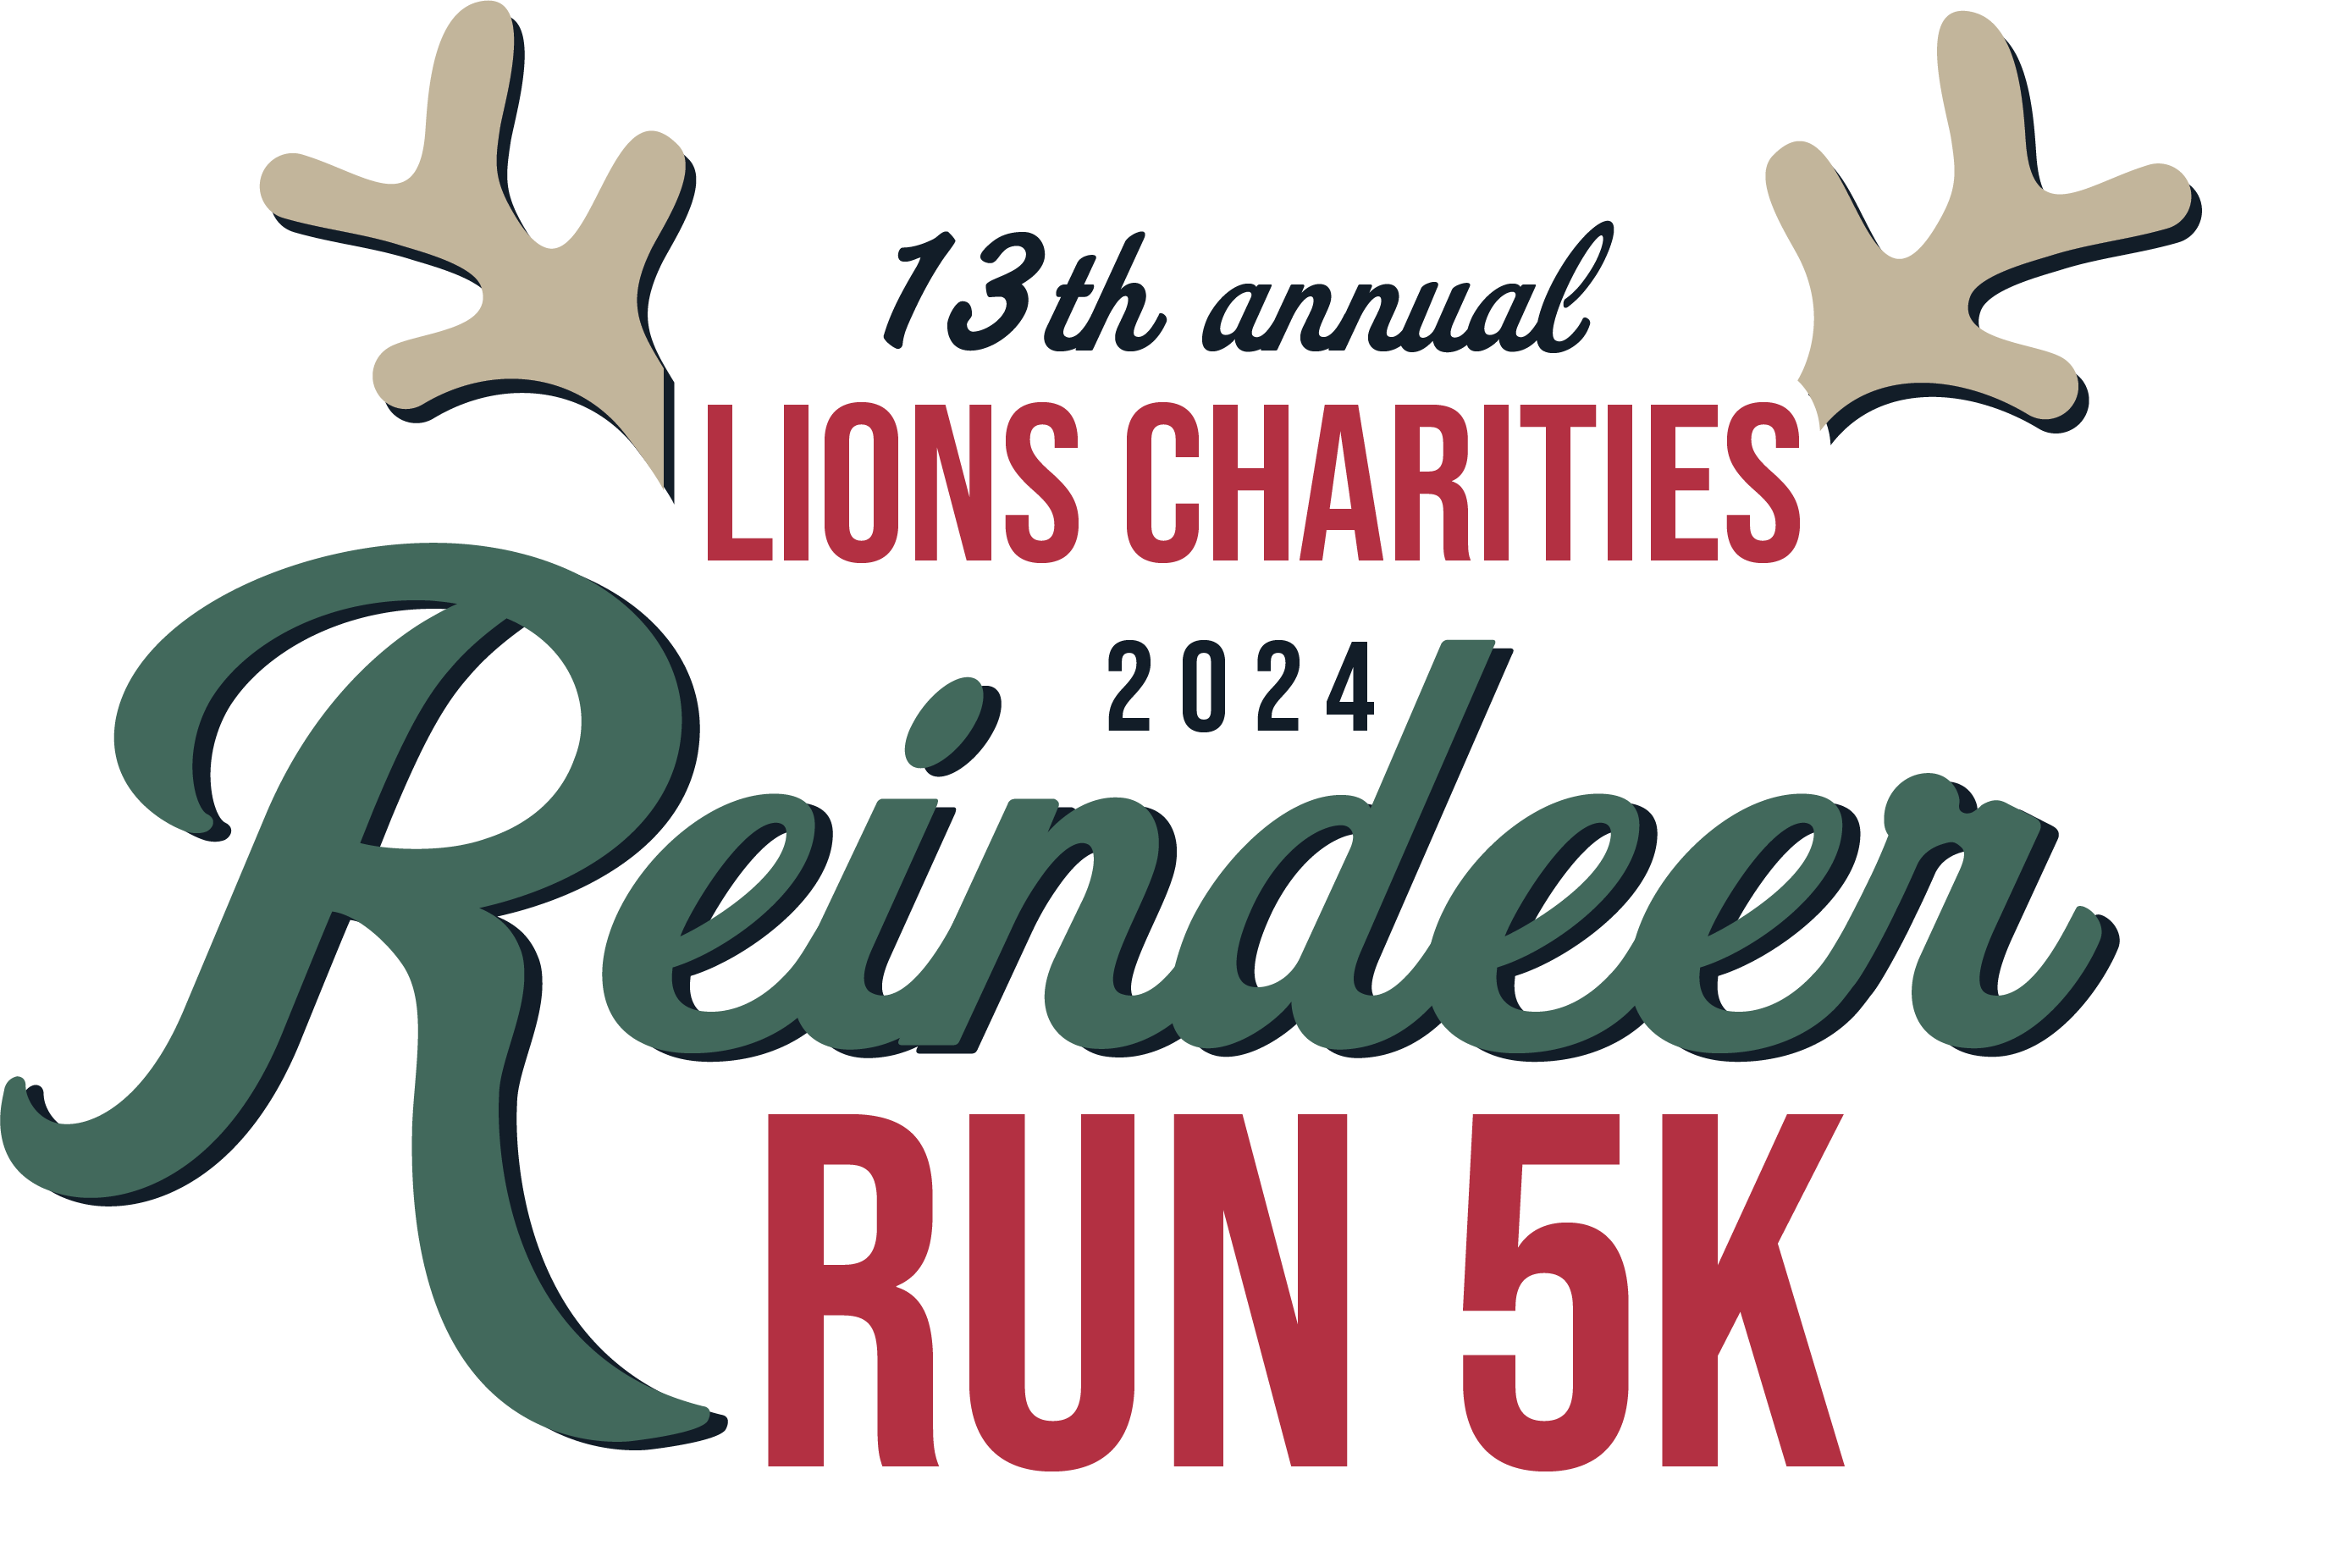 Lions Charities Reindeer Run 5K